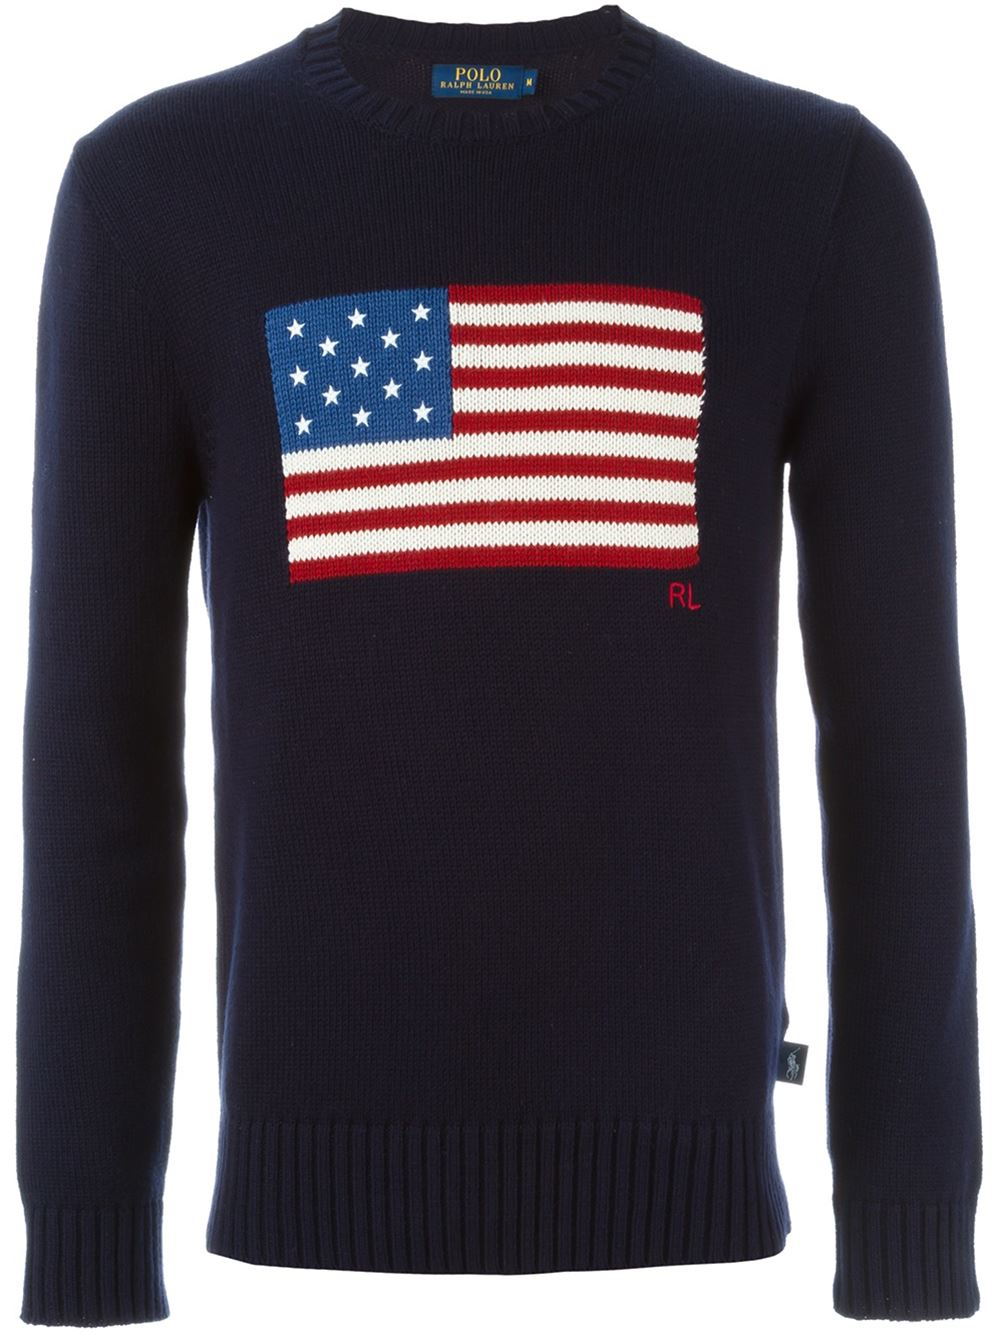 Lyst Polo Ralph Lauren American Flag Sweater In Blue For Men